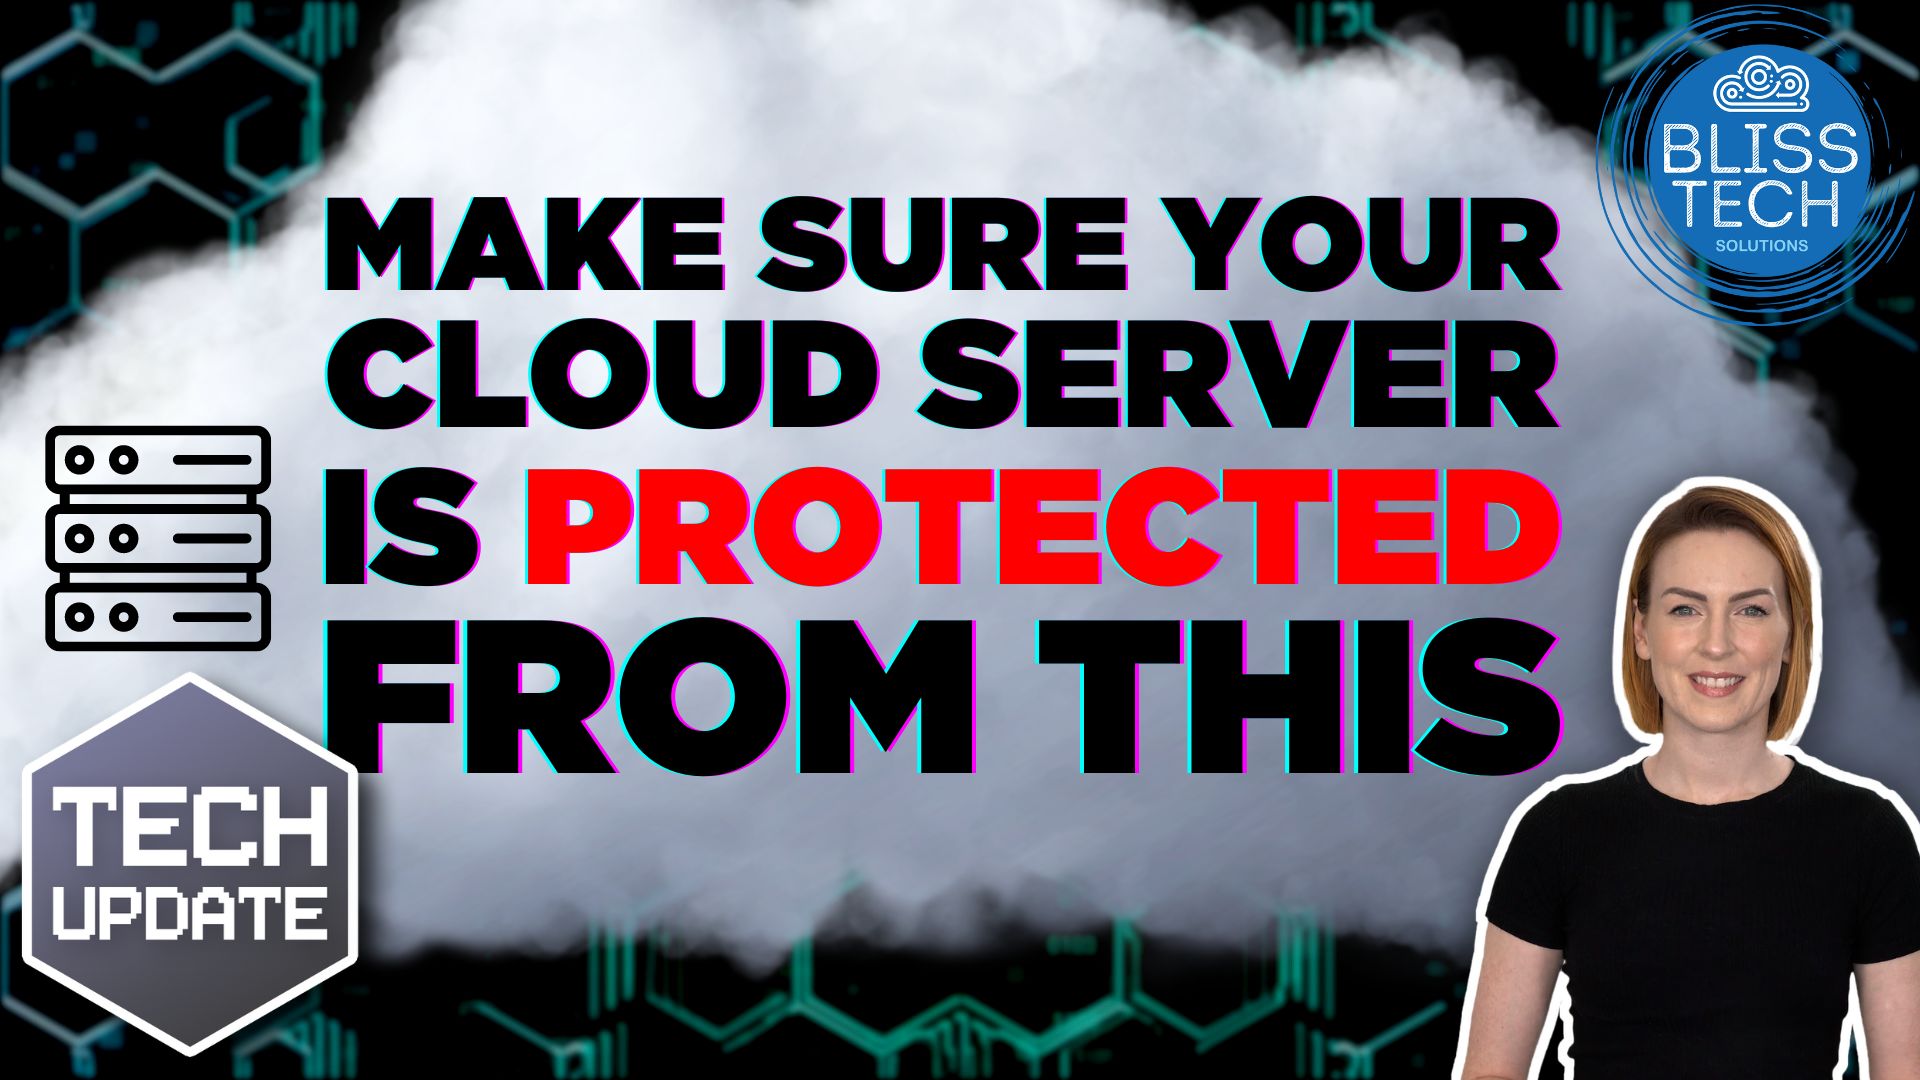 Cloud server hacks video thumbnail